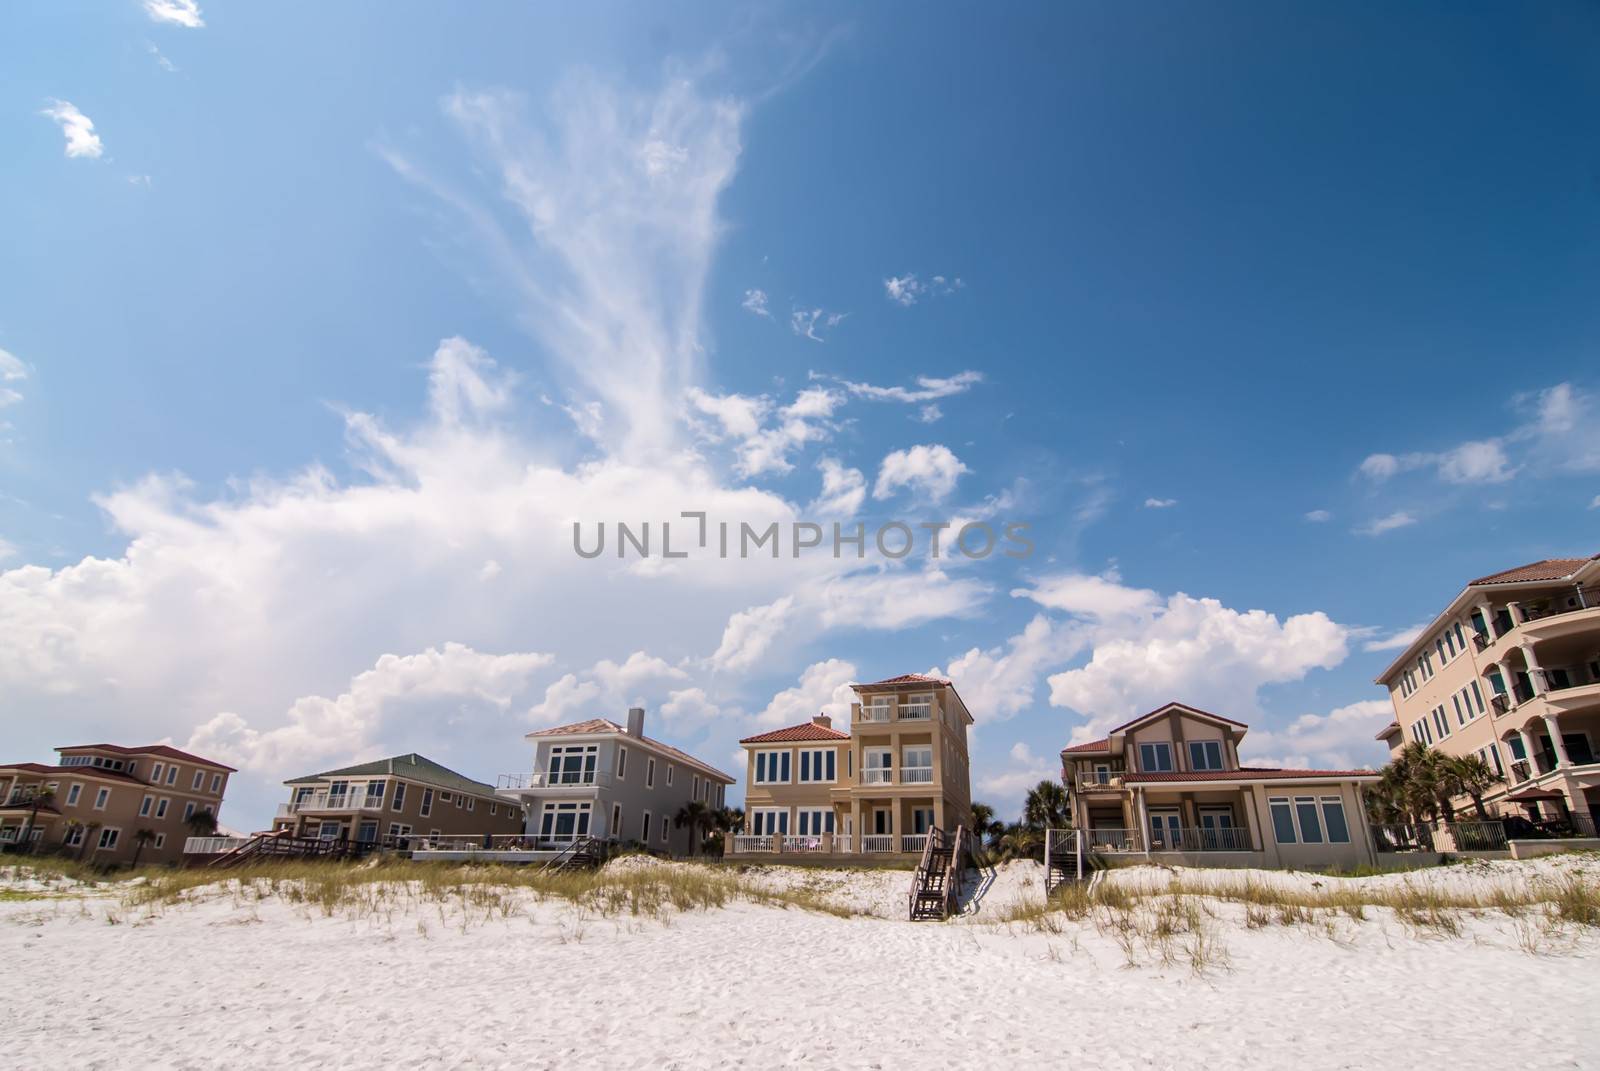 destin florida beach scenes by digidreamgrafix